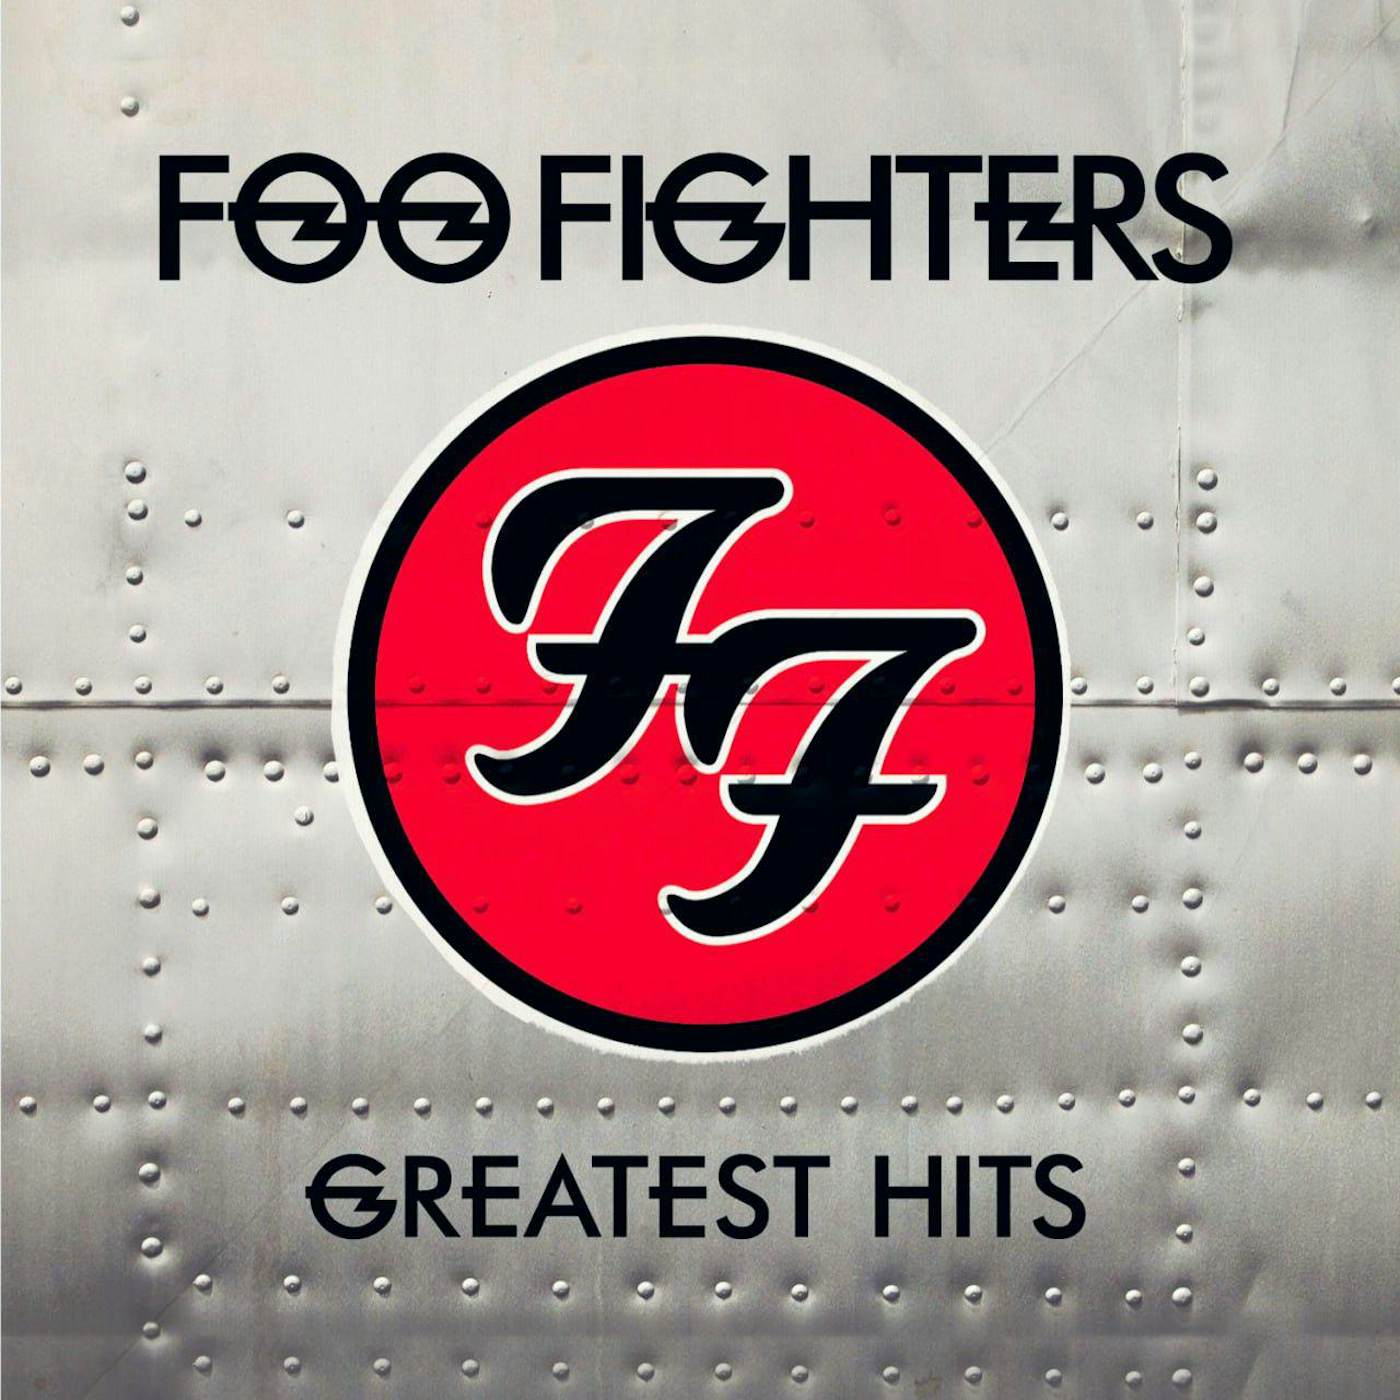 Foo Fighters Greatest Hits (2LP) Vinyl Record